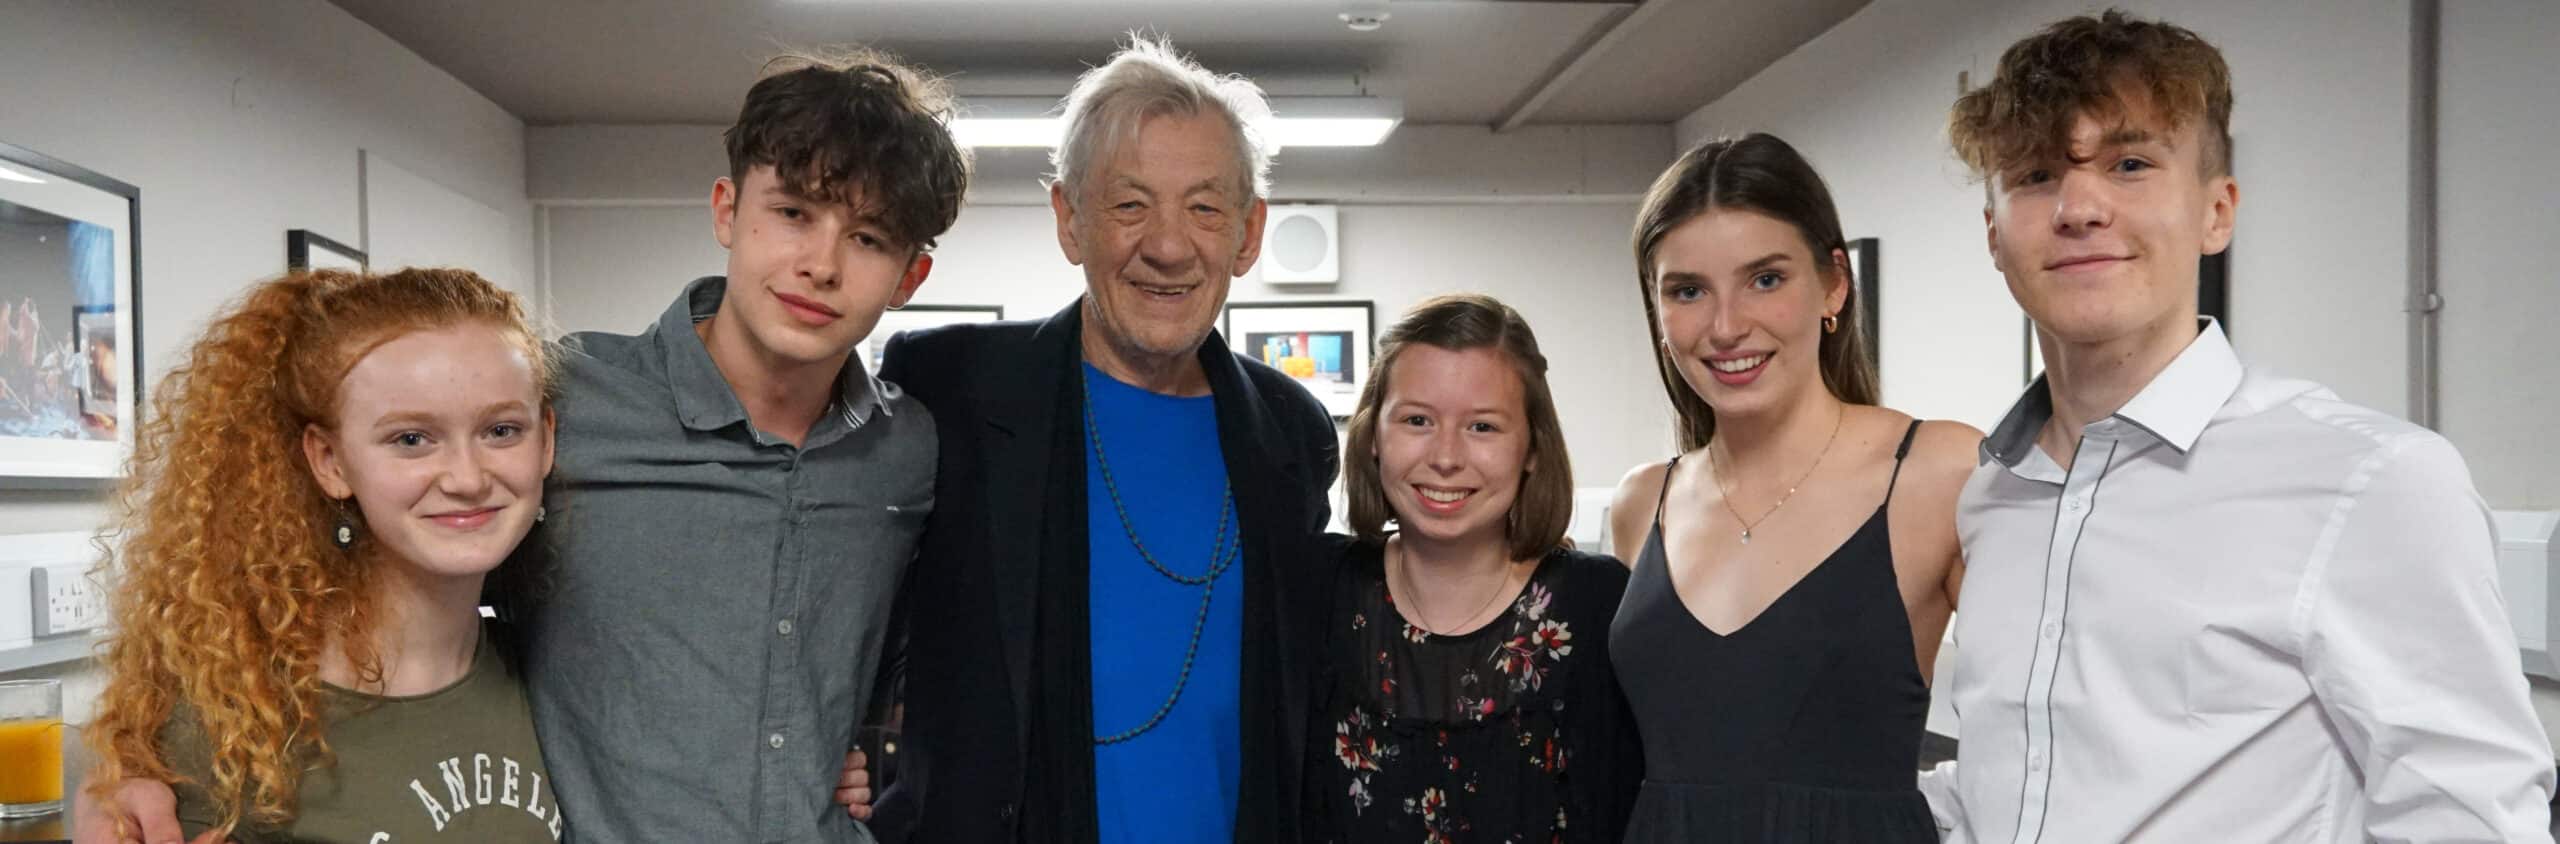 Sir Ian McKellan with five teenage actors